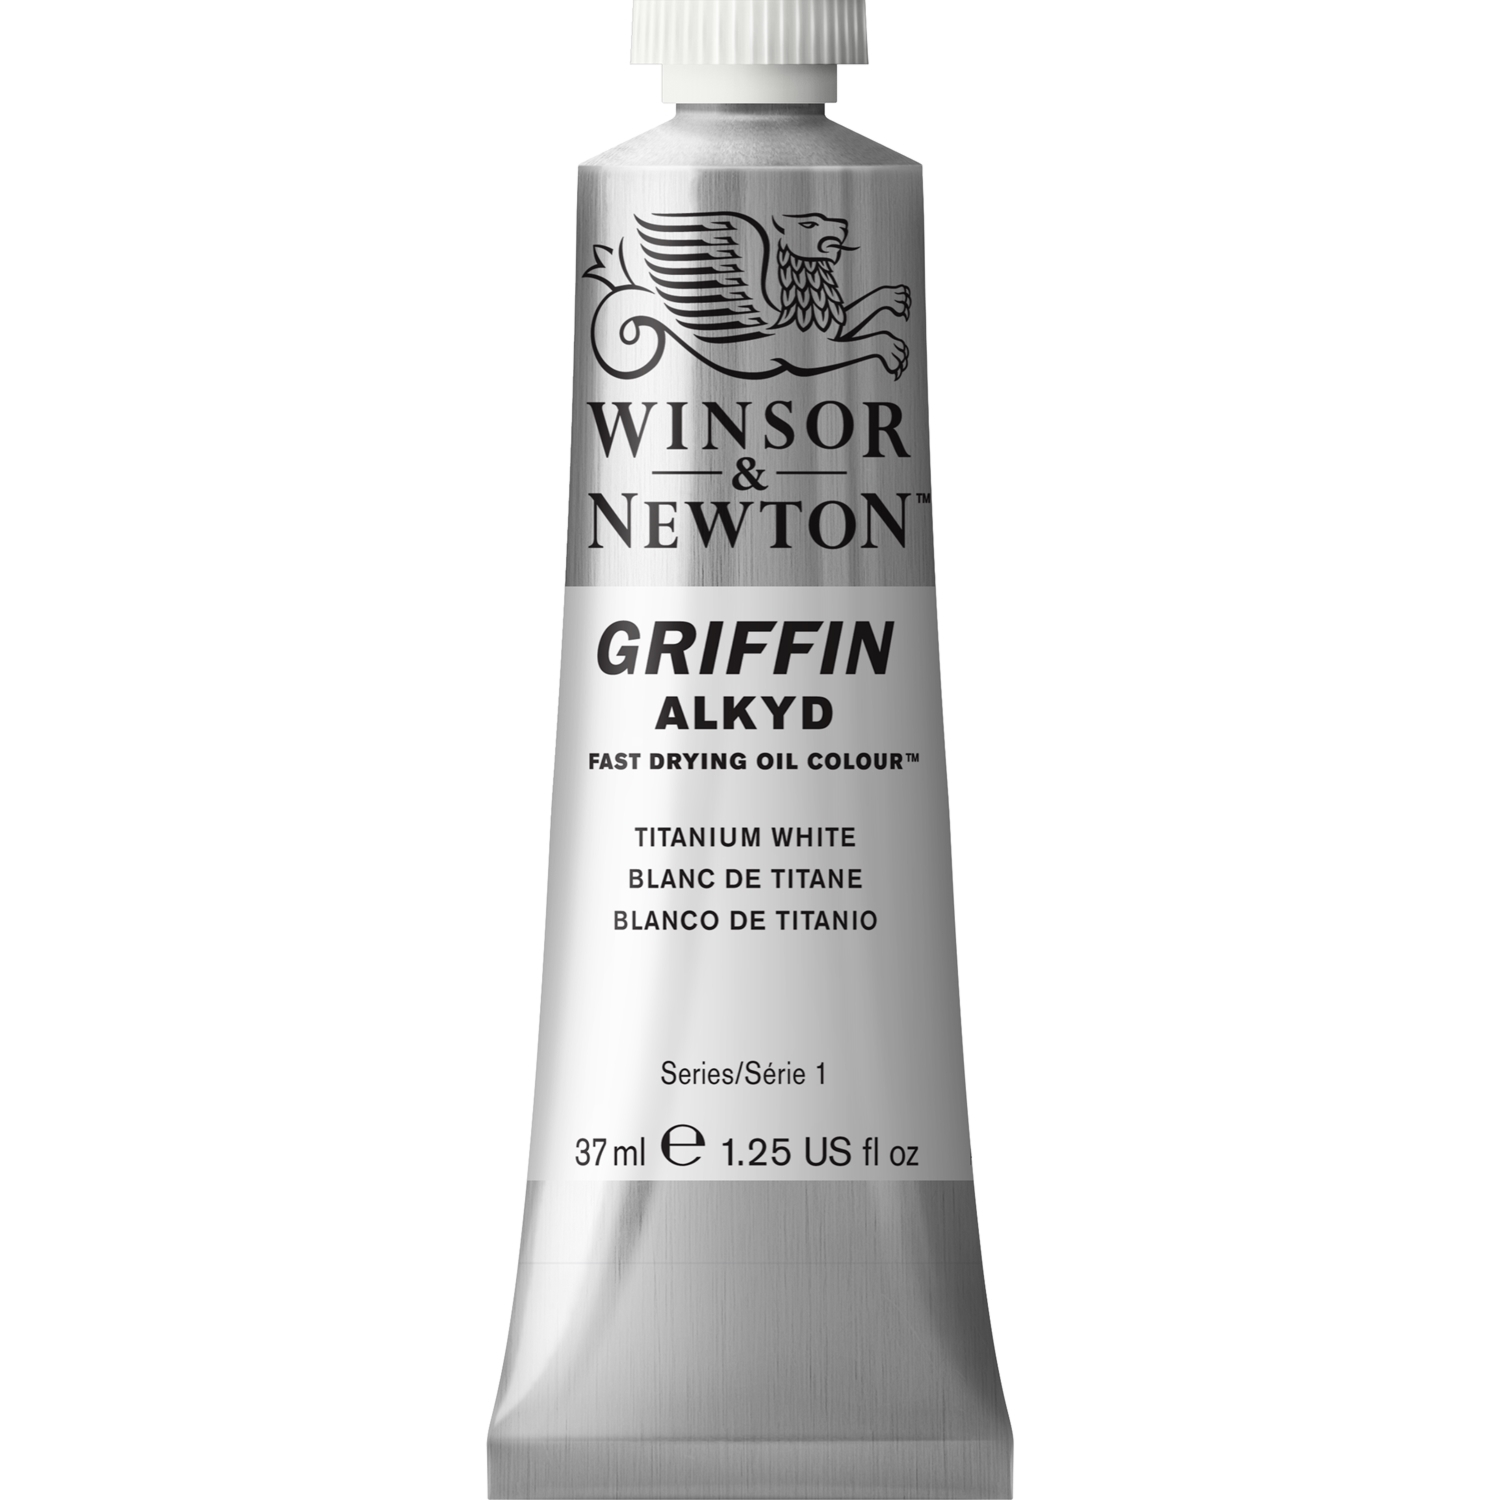 Winsor and Newton Griffin Alkyd Oil Colour - Titanium White Image 1